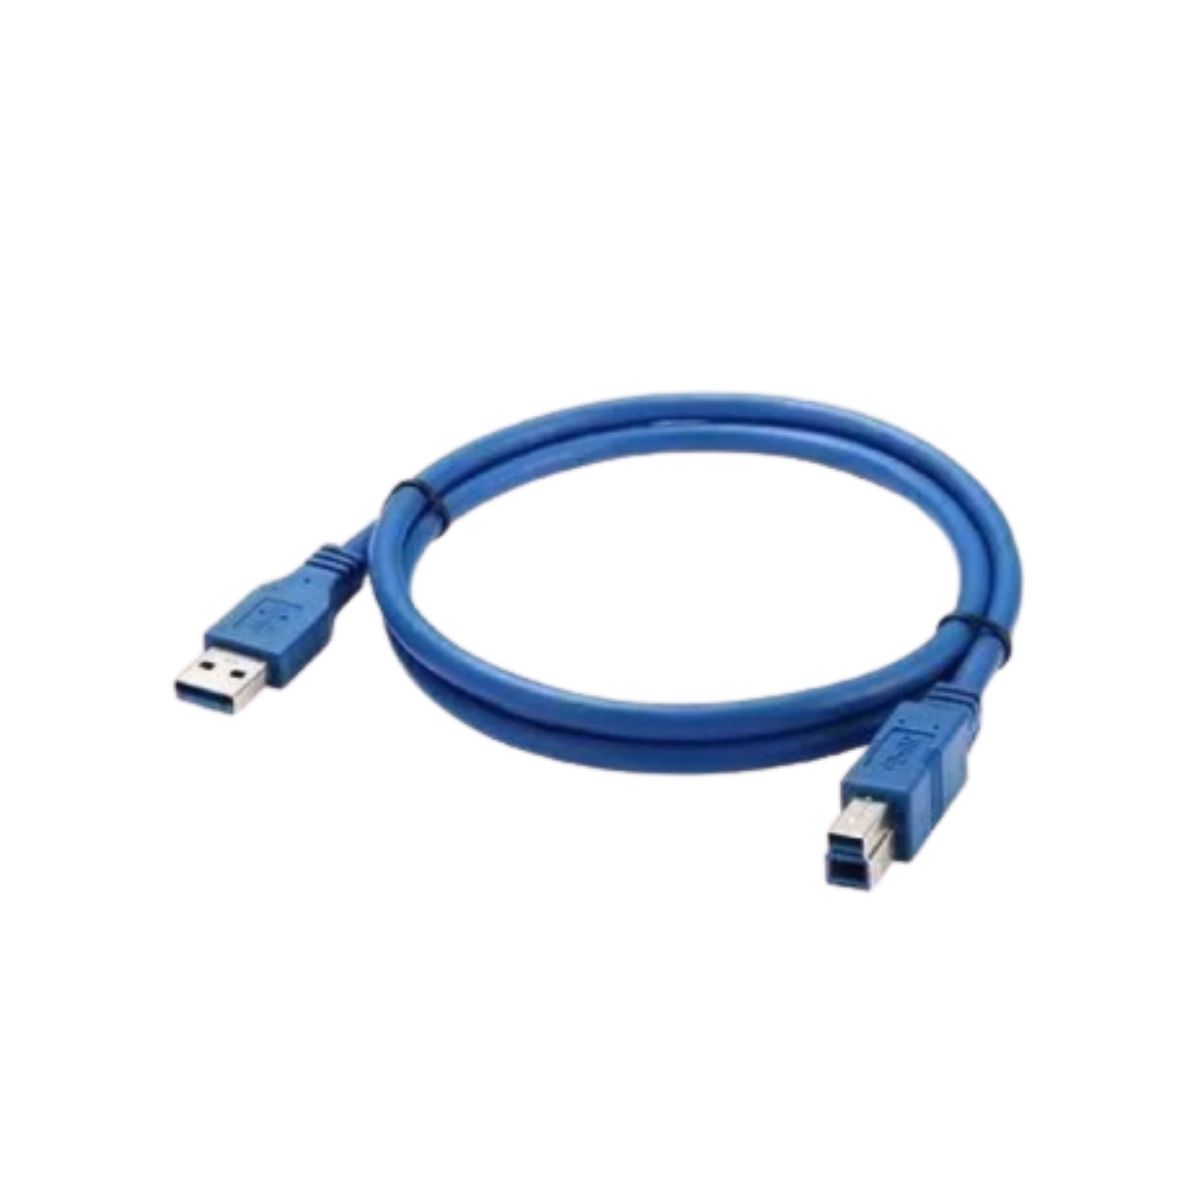 Cable USB “A” Macho / USB “B” Macho - Impresora - 1.8mt